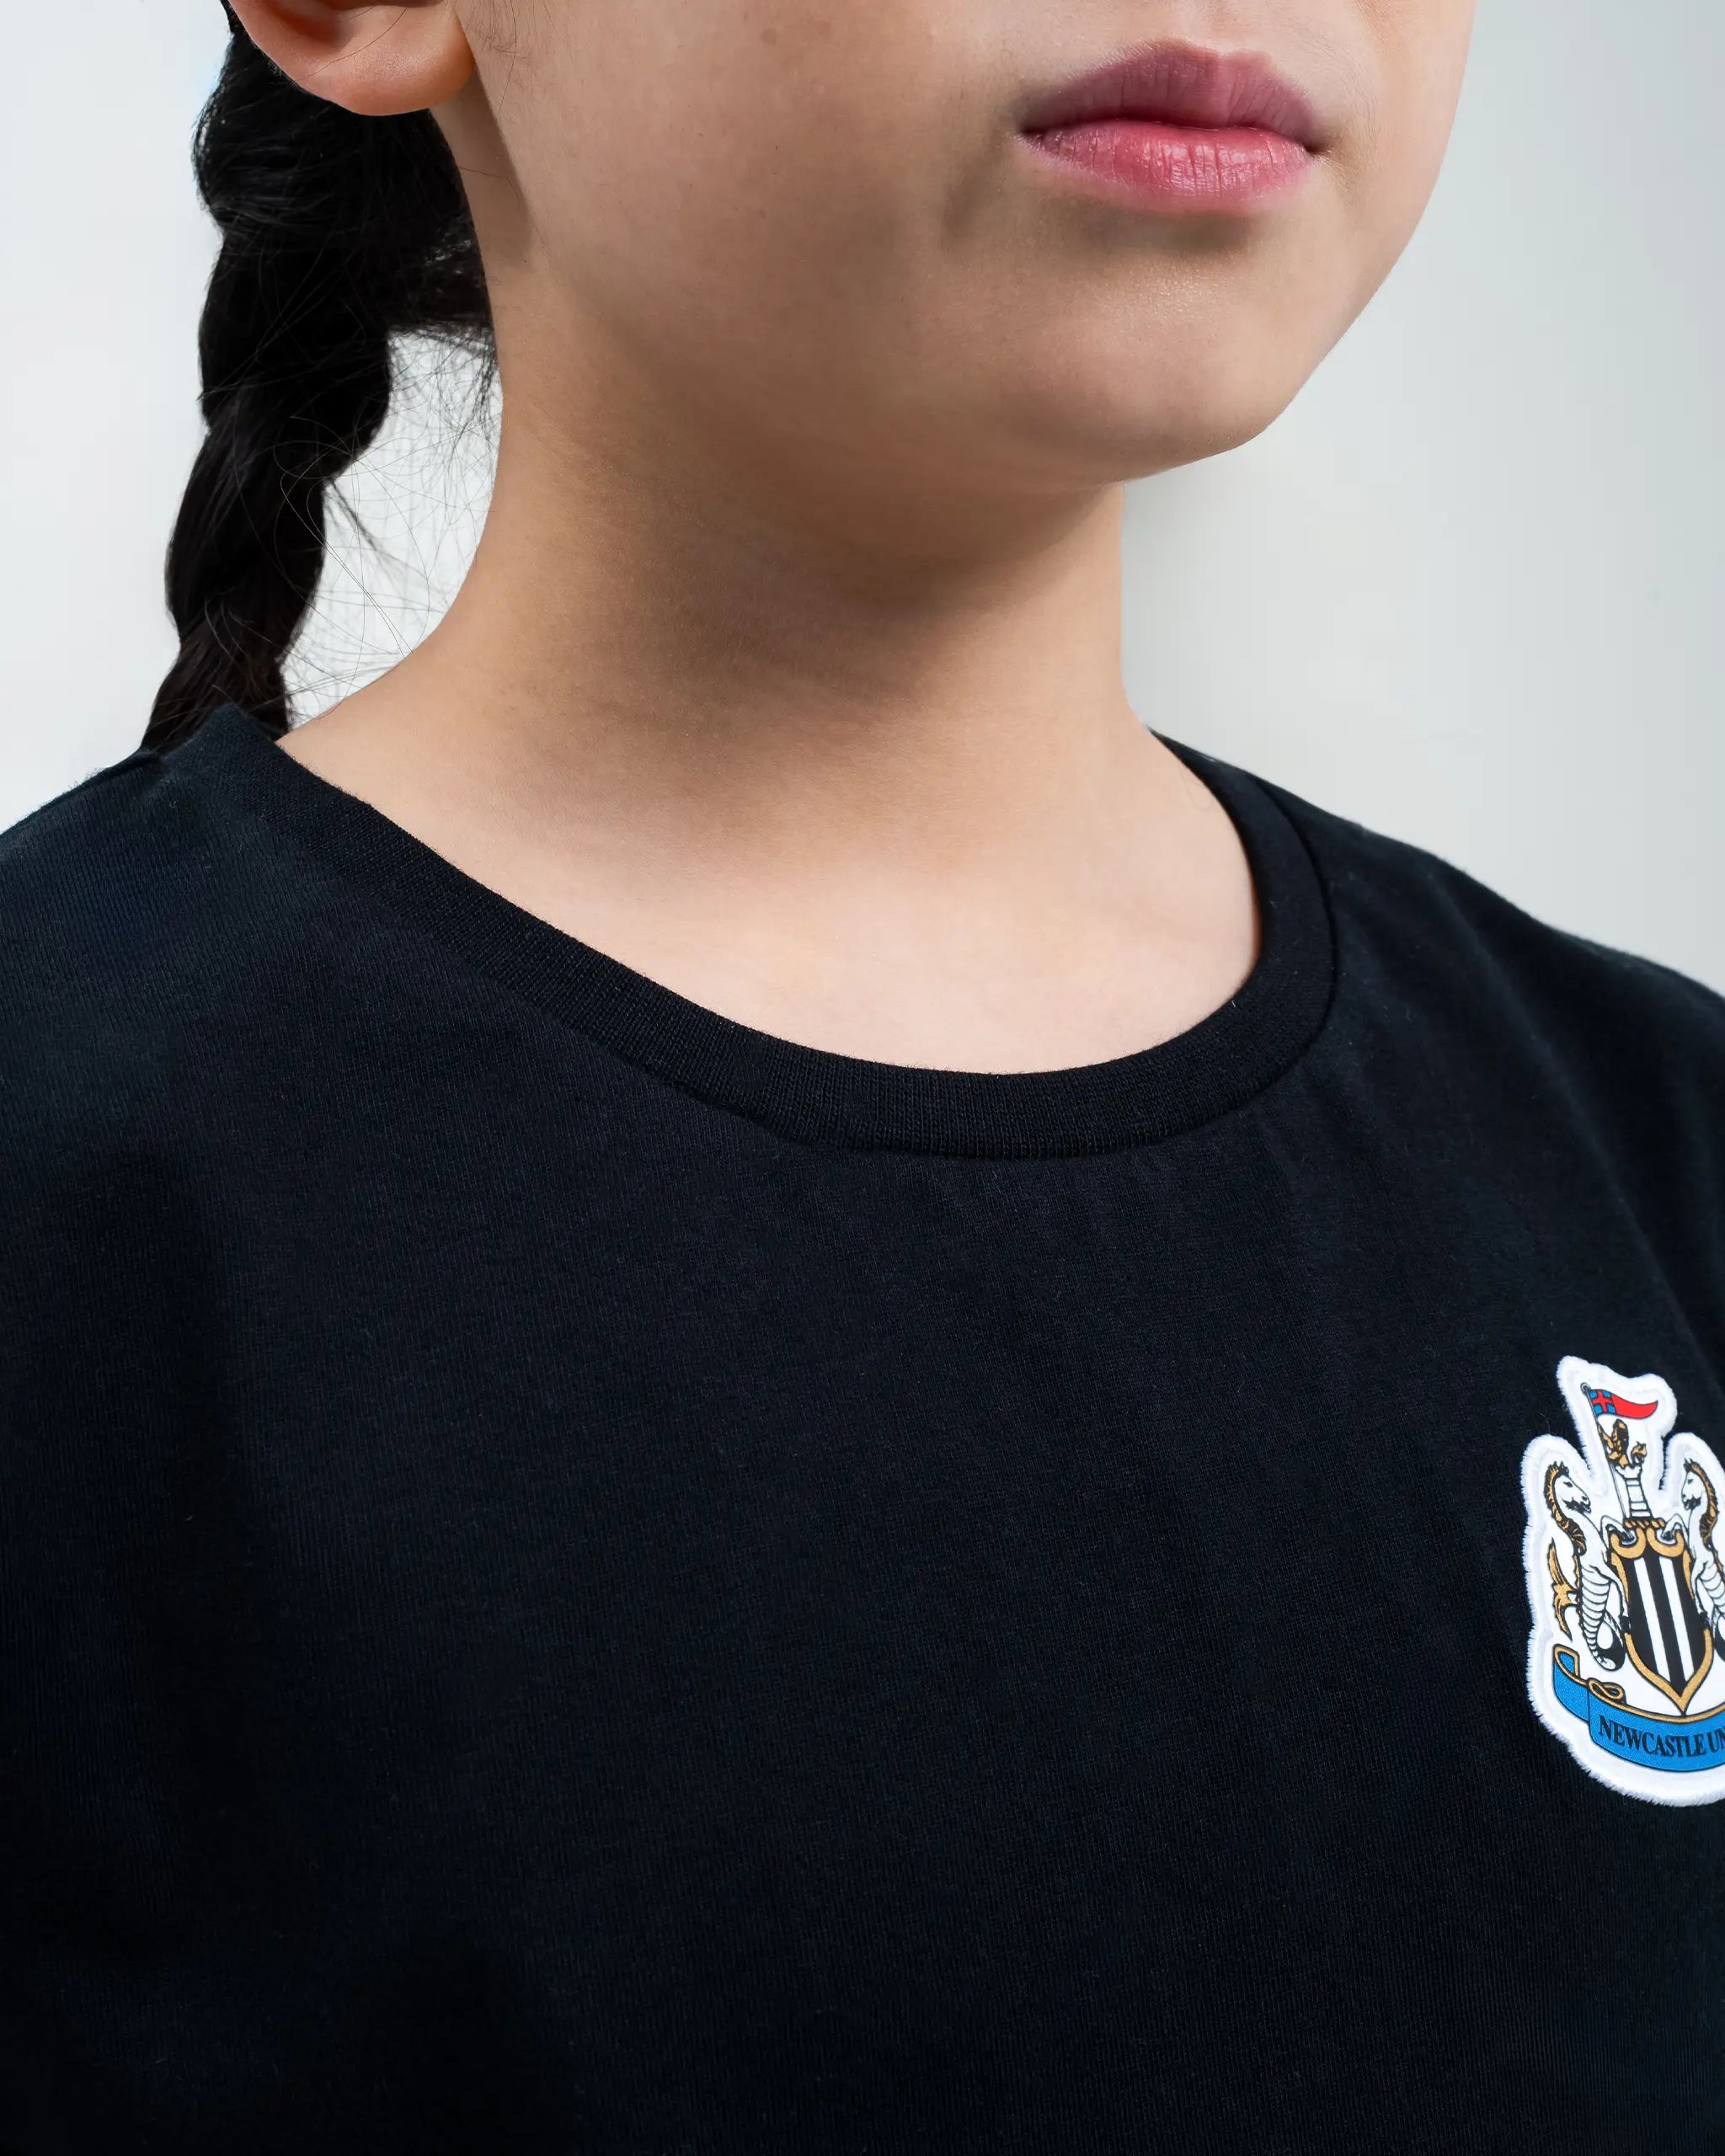 Newcastle United Girl's Black Terrace Crest T-Shirt